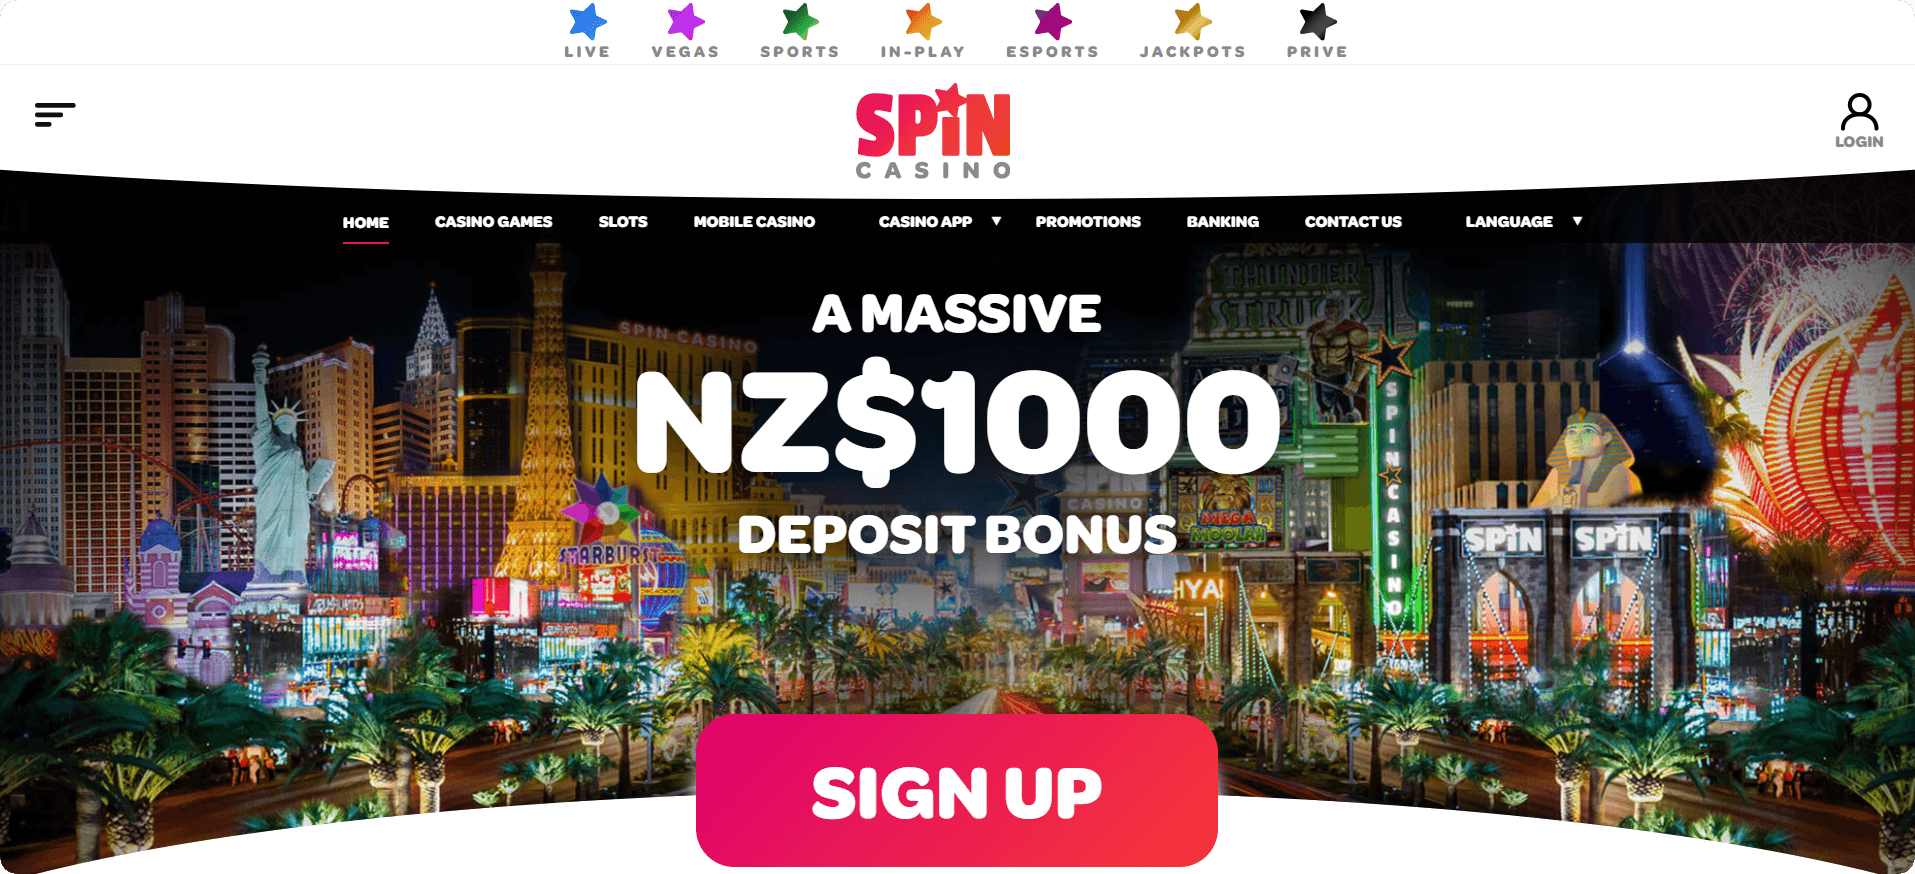 Spin casino welcome bonus